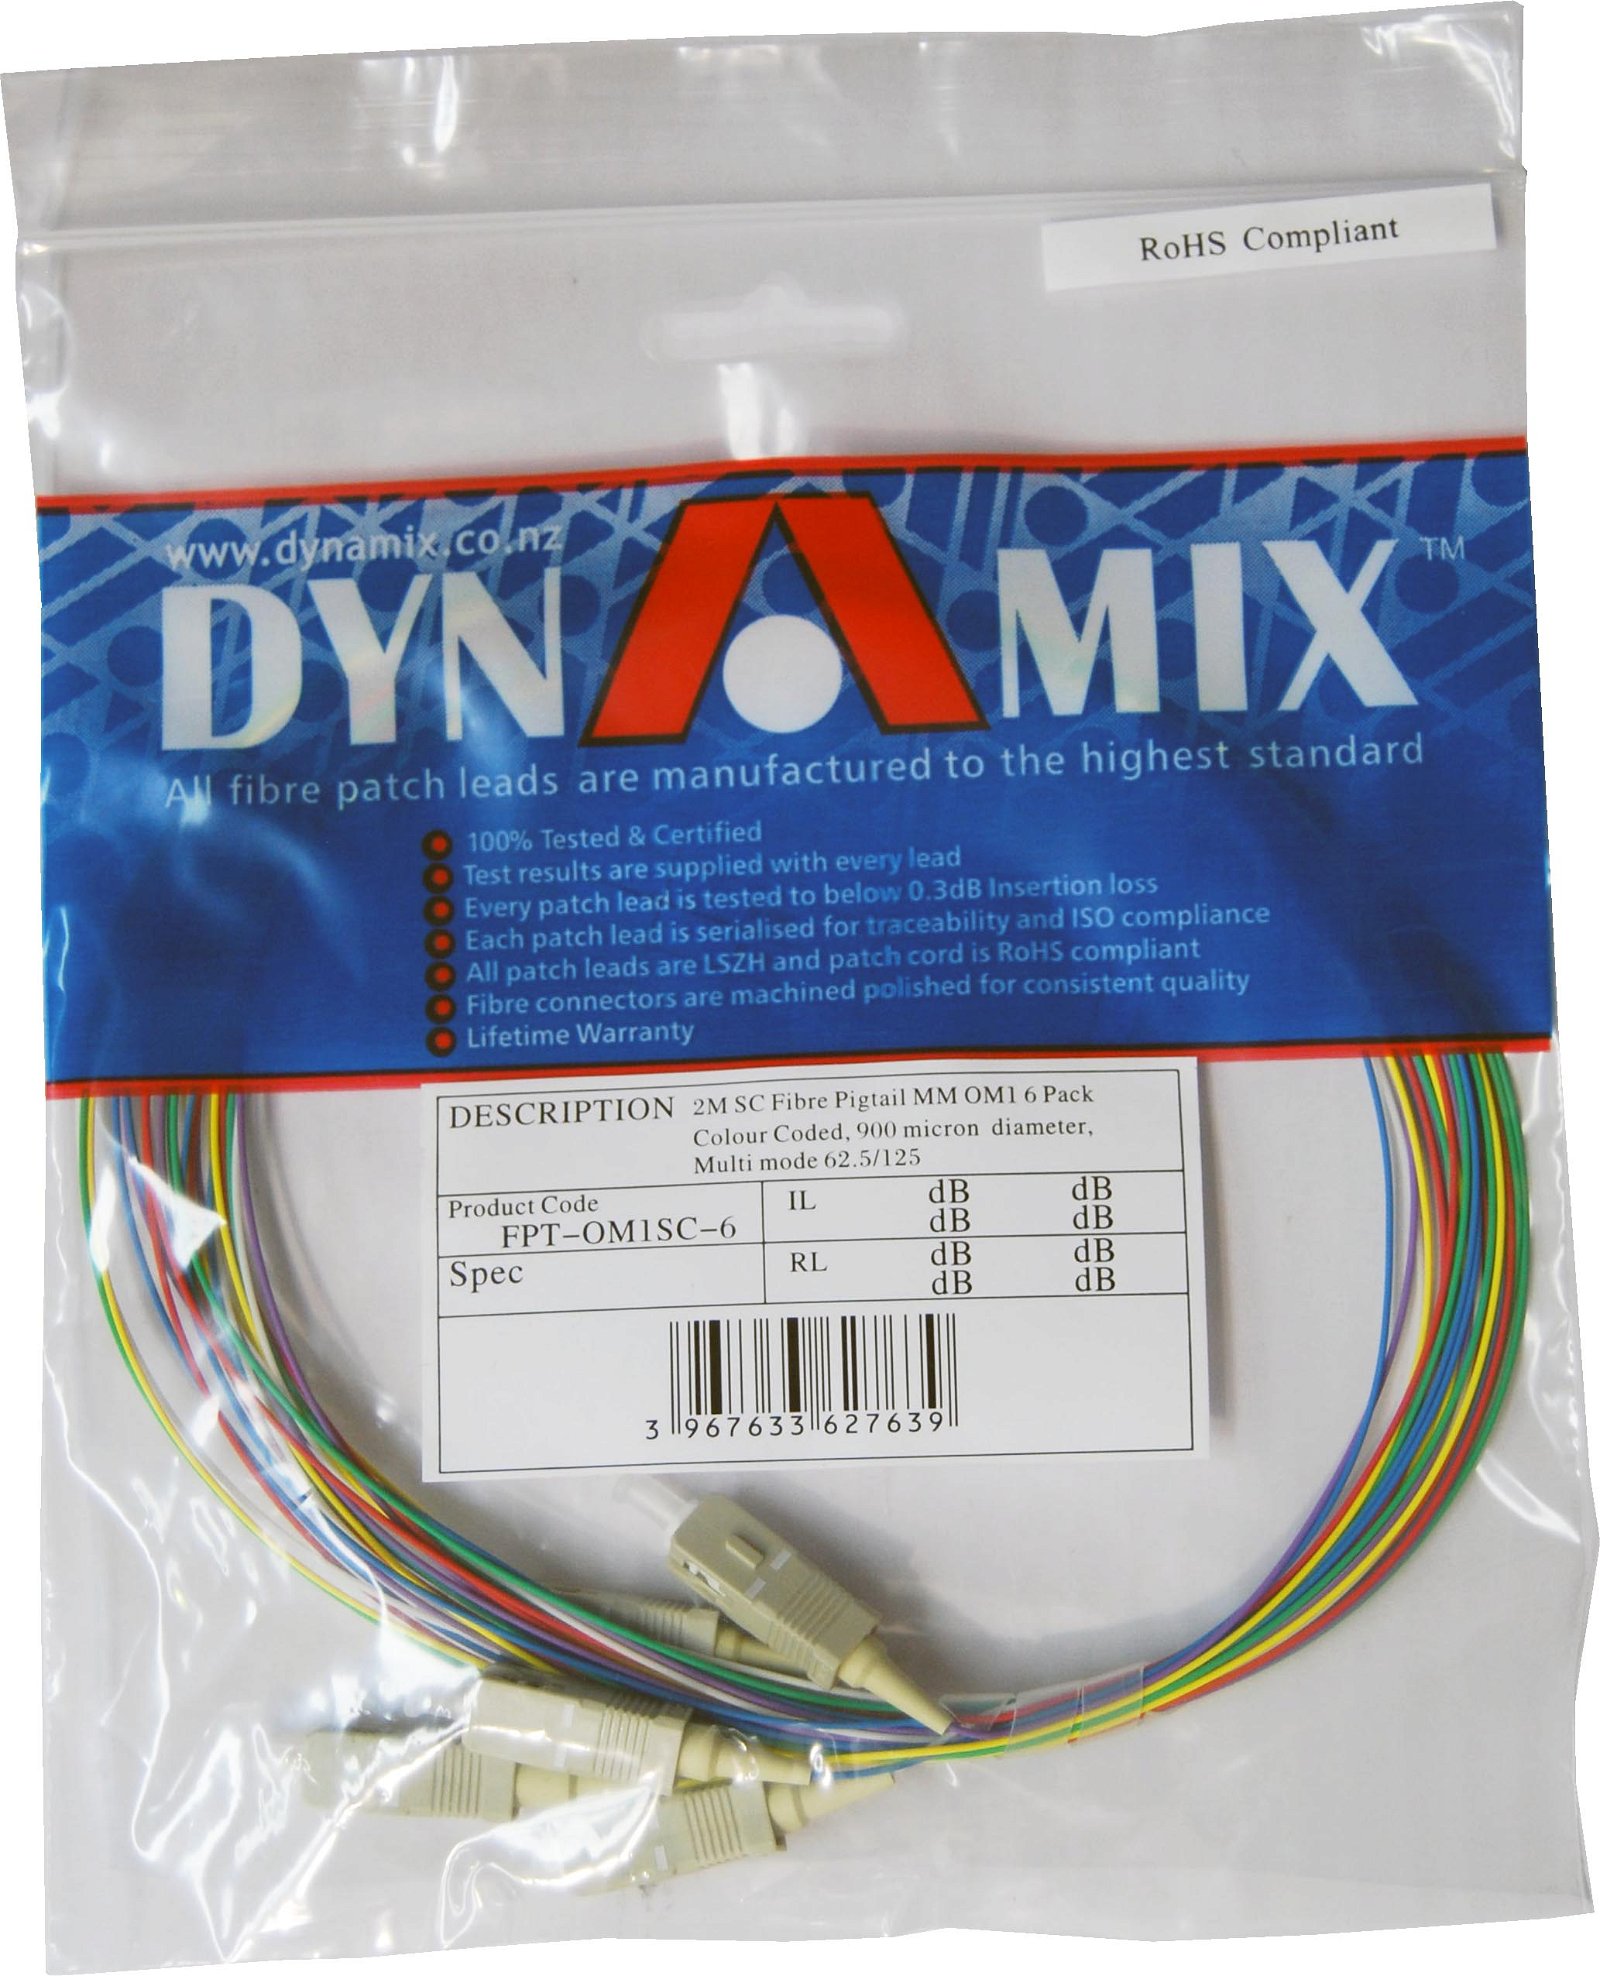 DYNAMIX 2M SC Pigtail OS1 6 Pack Colour Coded, 900um Single mode Fibre, Tight buffer